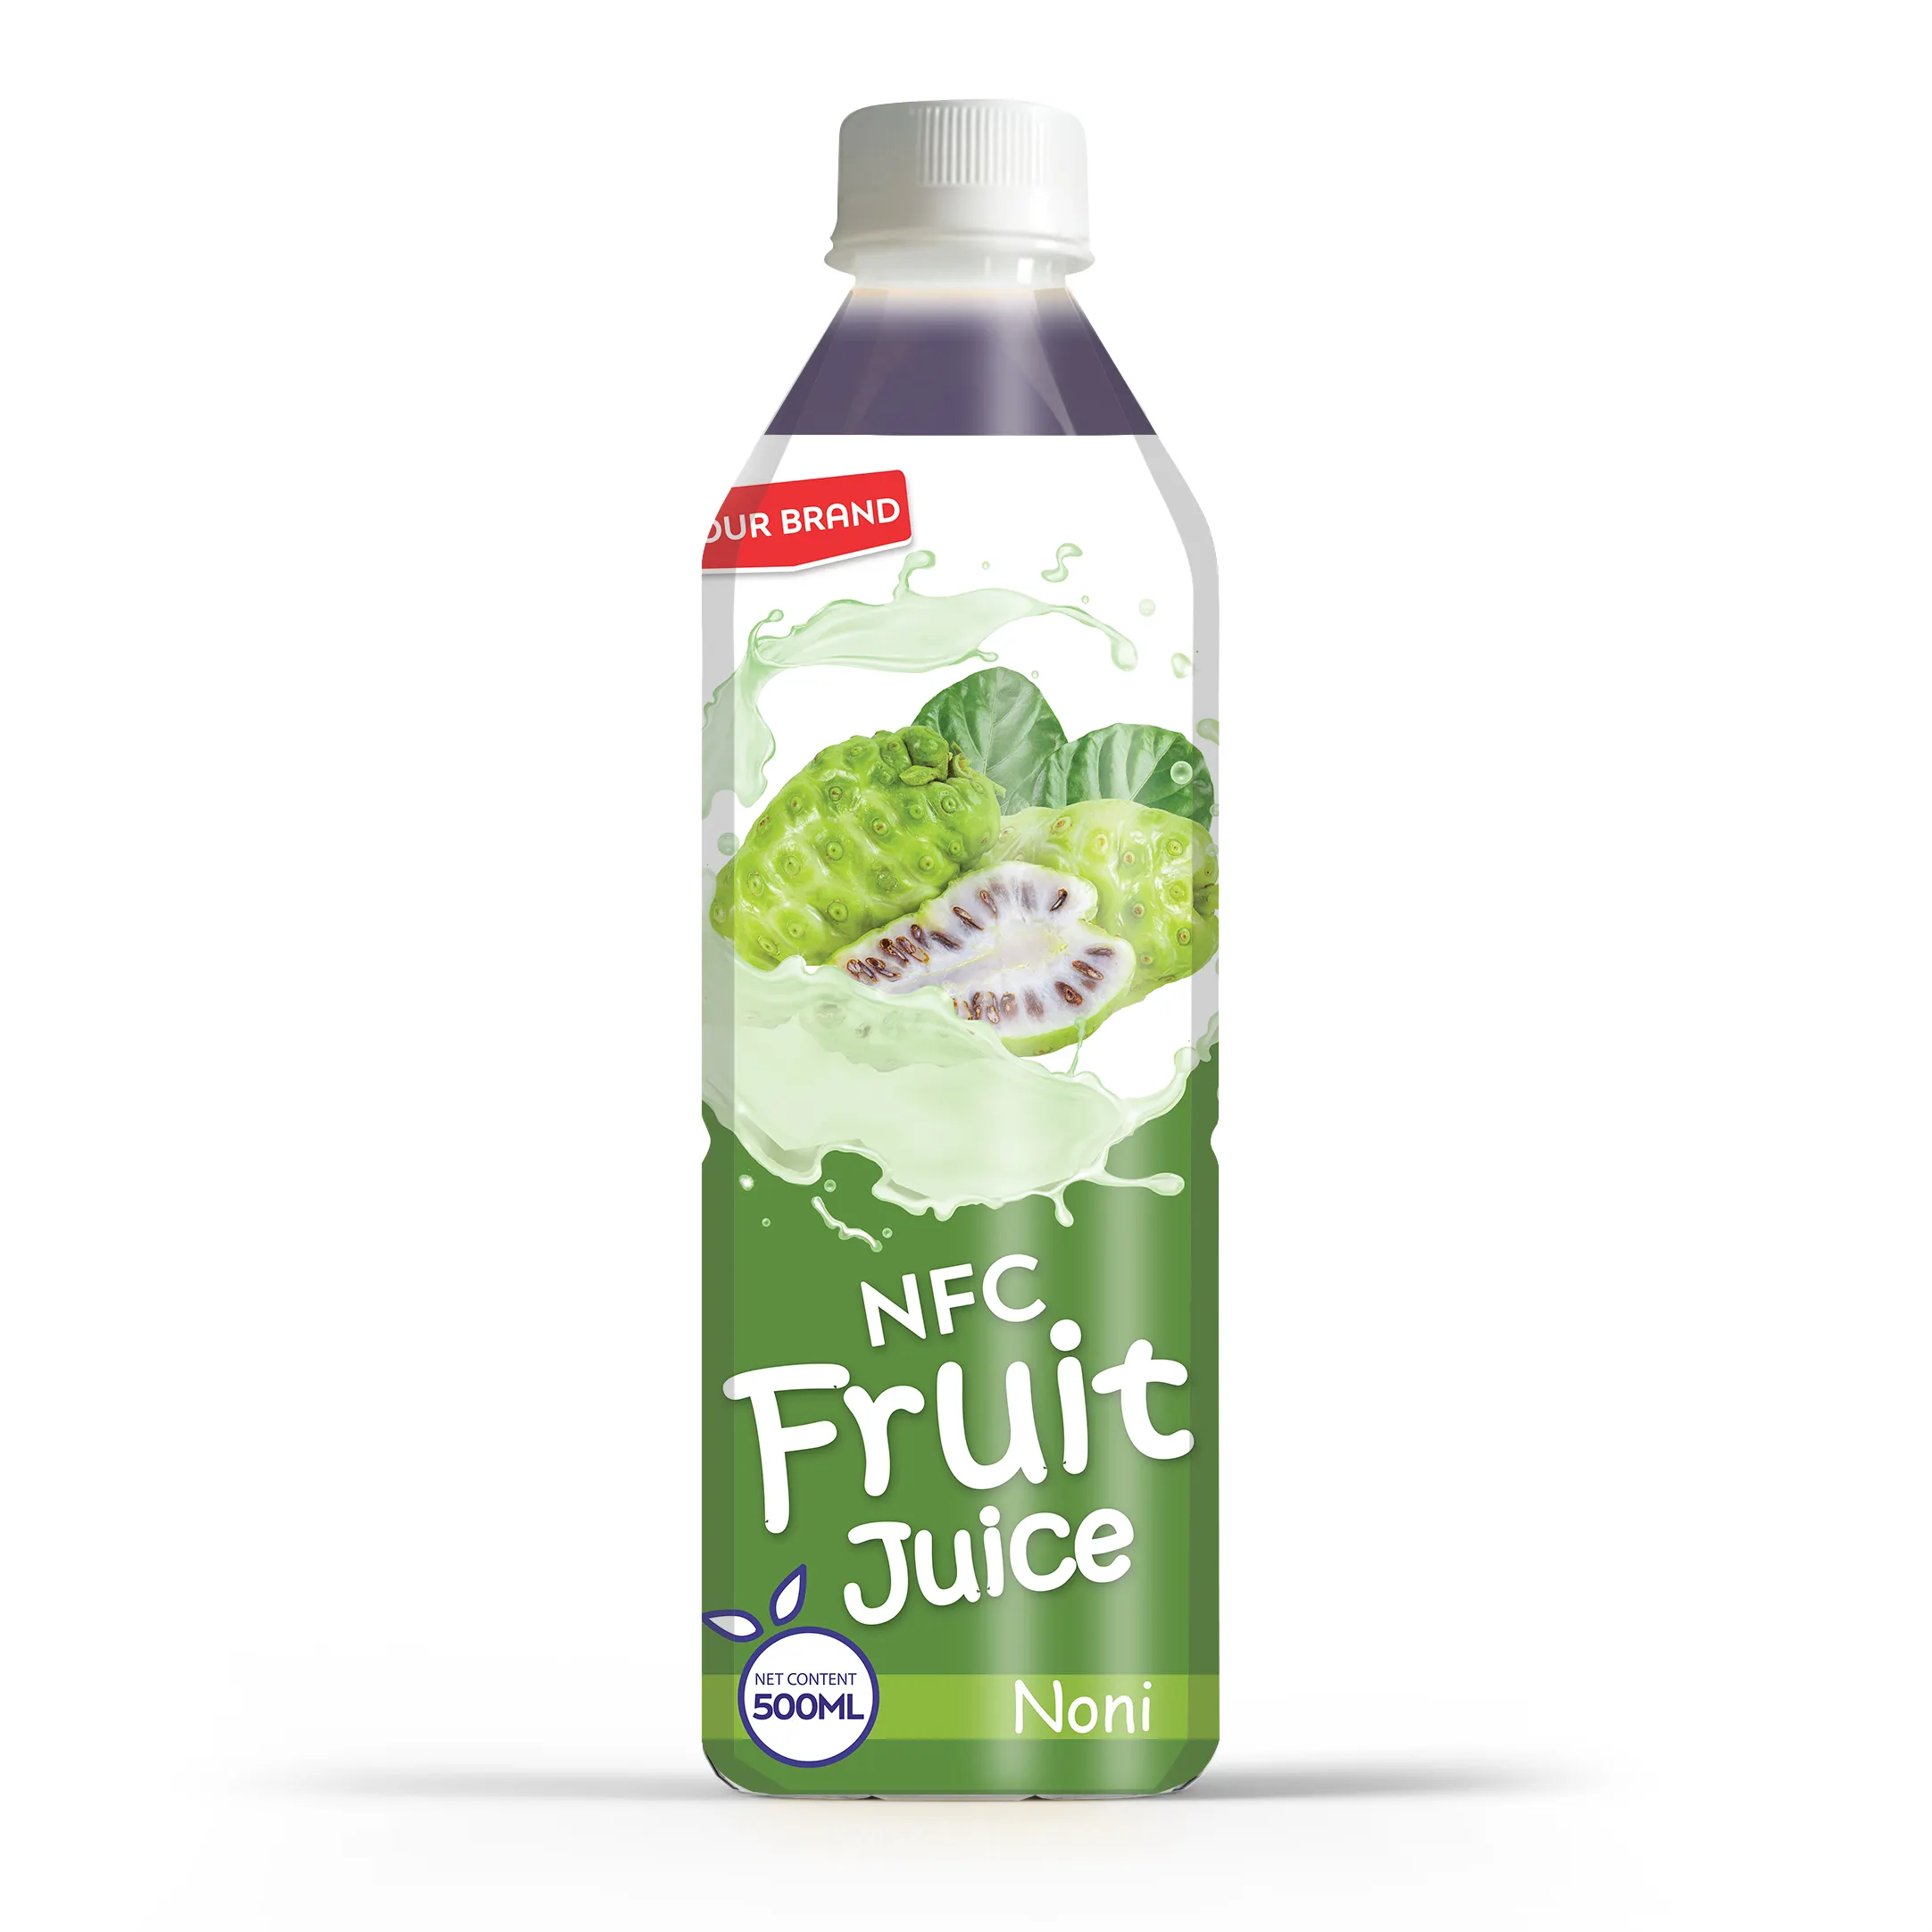 Bebidas de suco de fruta noni 500ml, etiqueta privada de alta qualidade